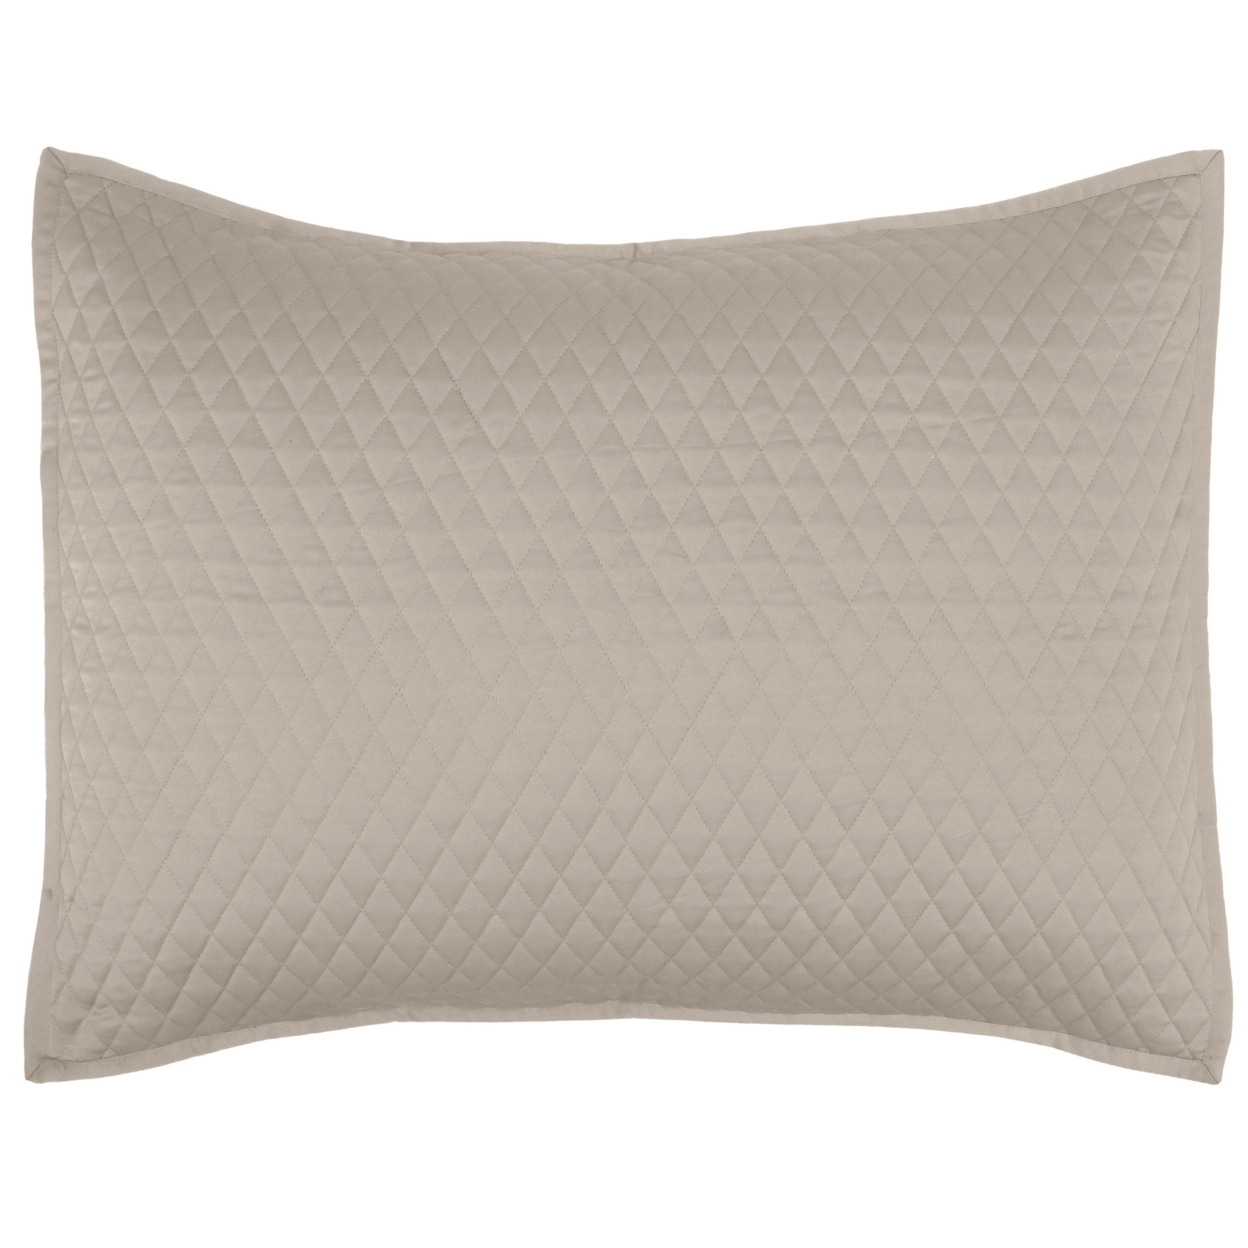 Kahn 26 Inch Hand Stitched Standard Pillow Sham, Cotton Fill, Matte Brown- Saltoro Sherpi